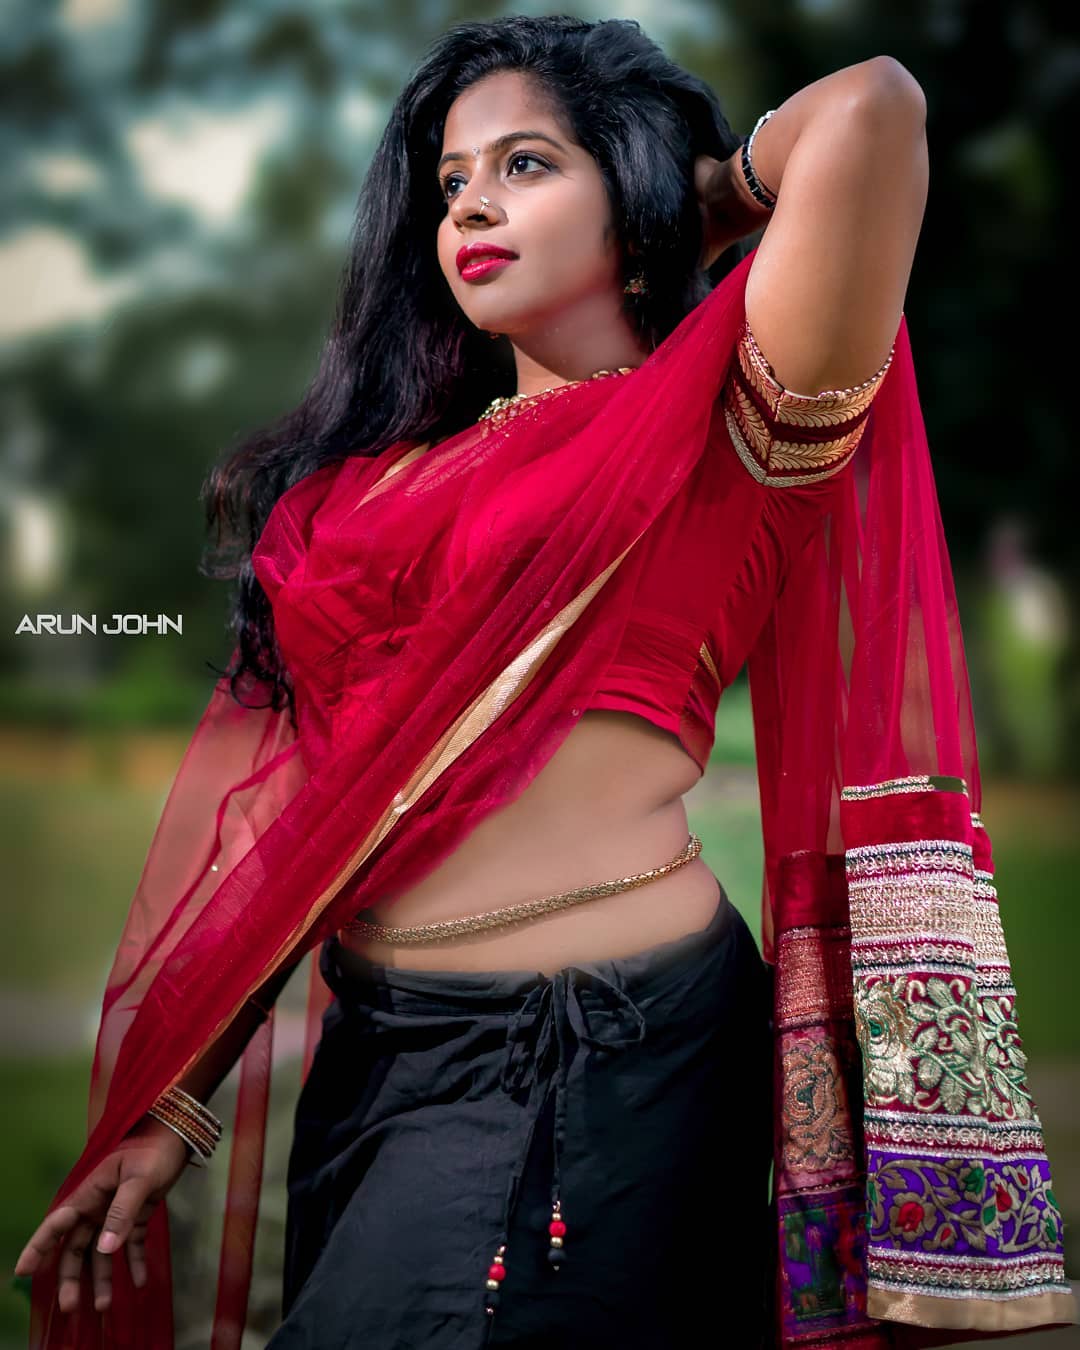 Stunning South Indian Plus Size Model Rose Angiedevish Fabulous 